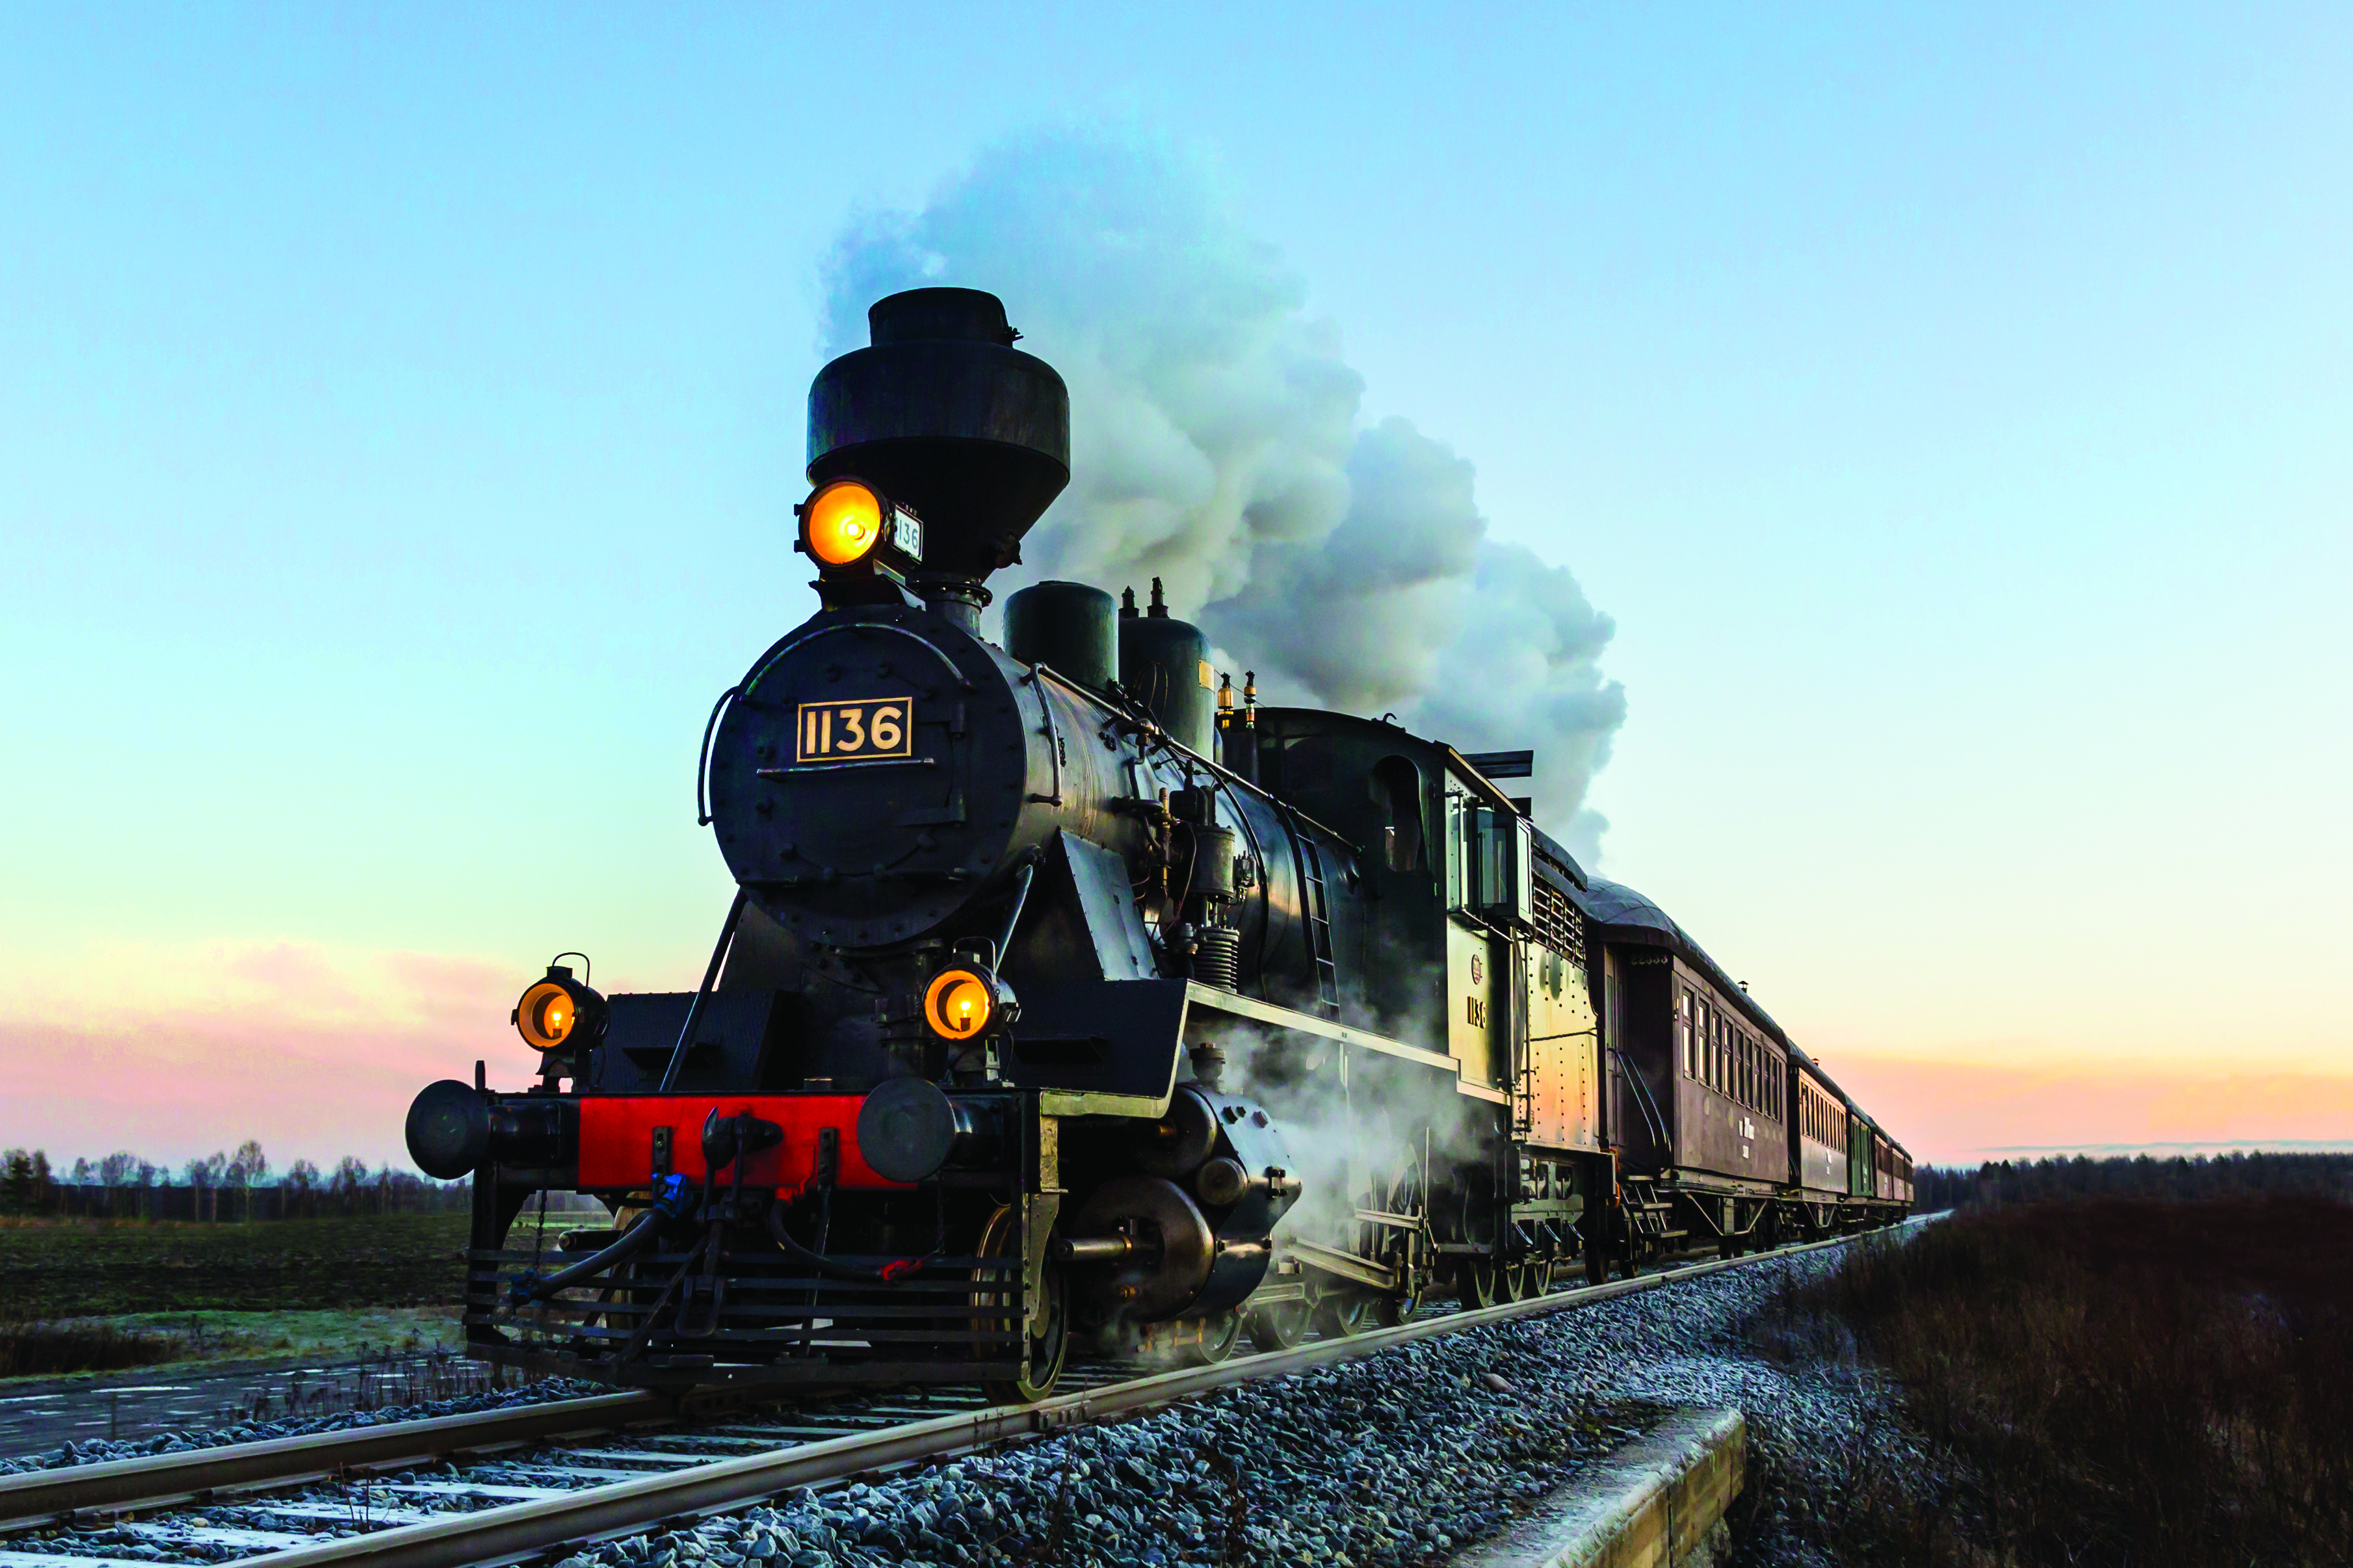 Fun Facts: Trains and railroads